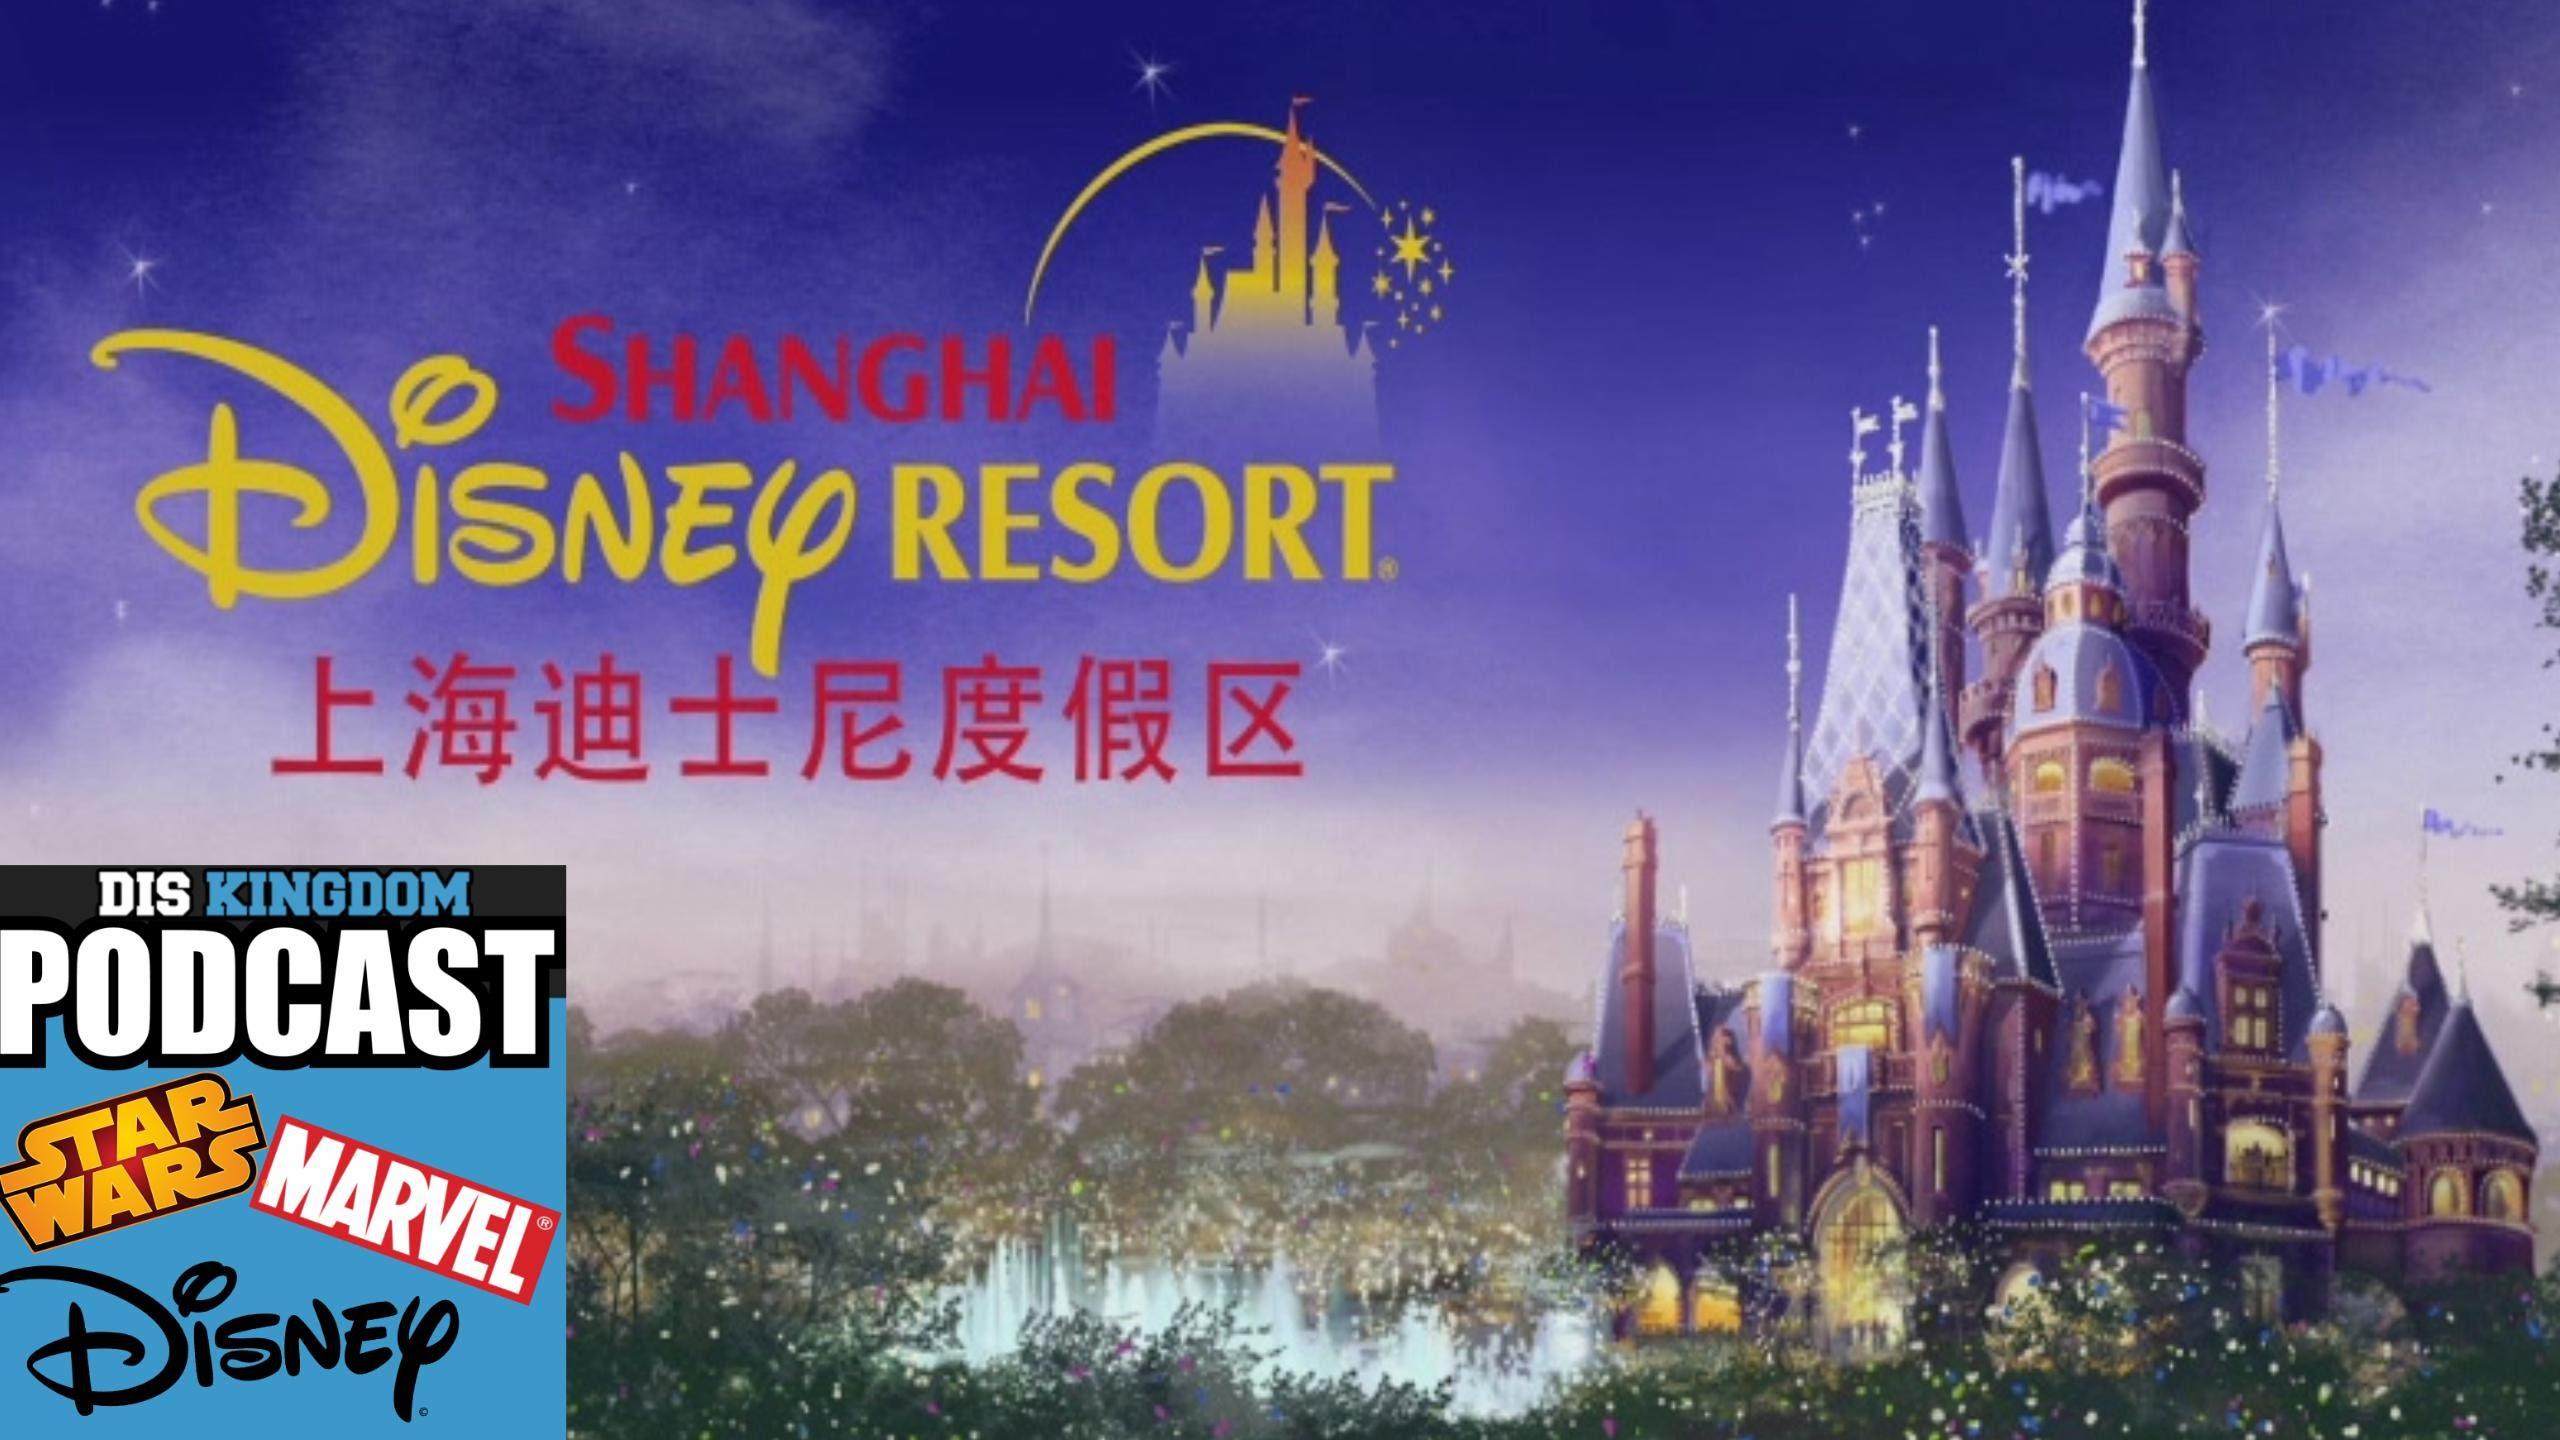 Shanghai Disneyland Logo - Shanghai Disneyland Opening In June